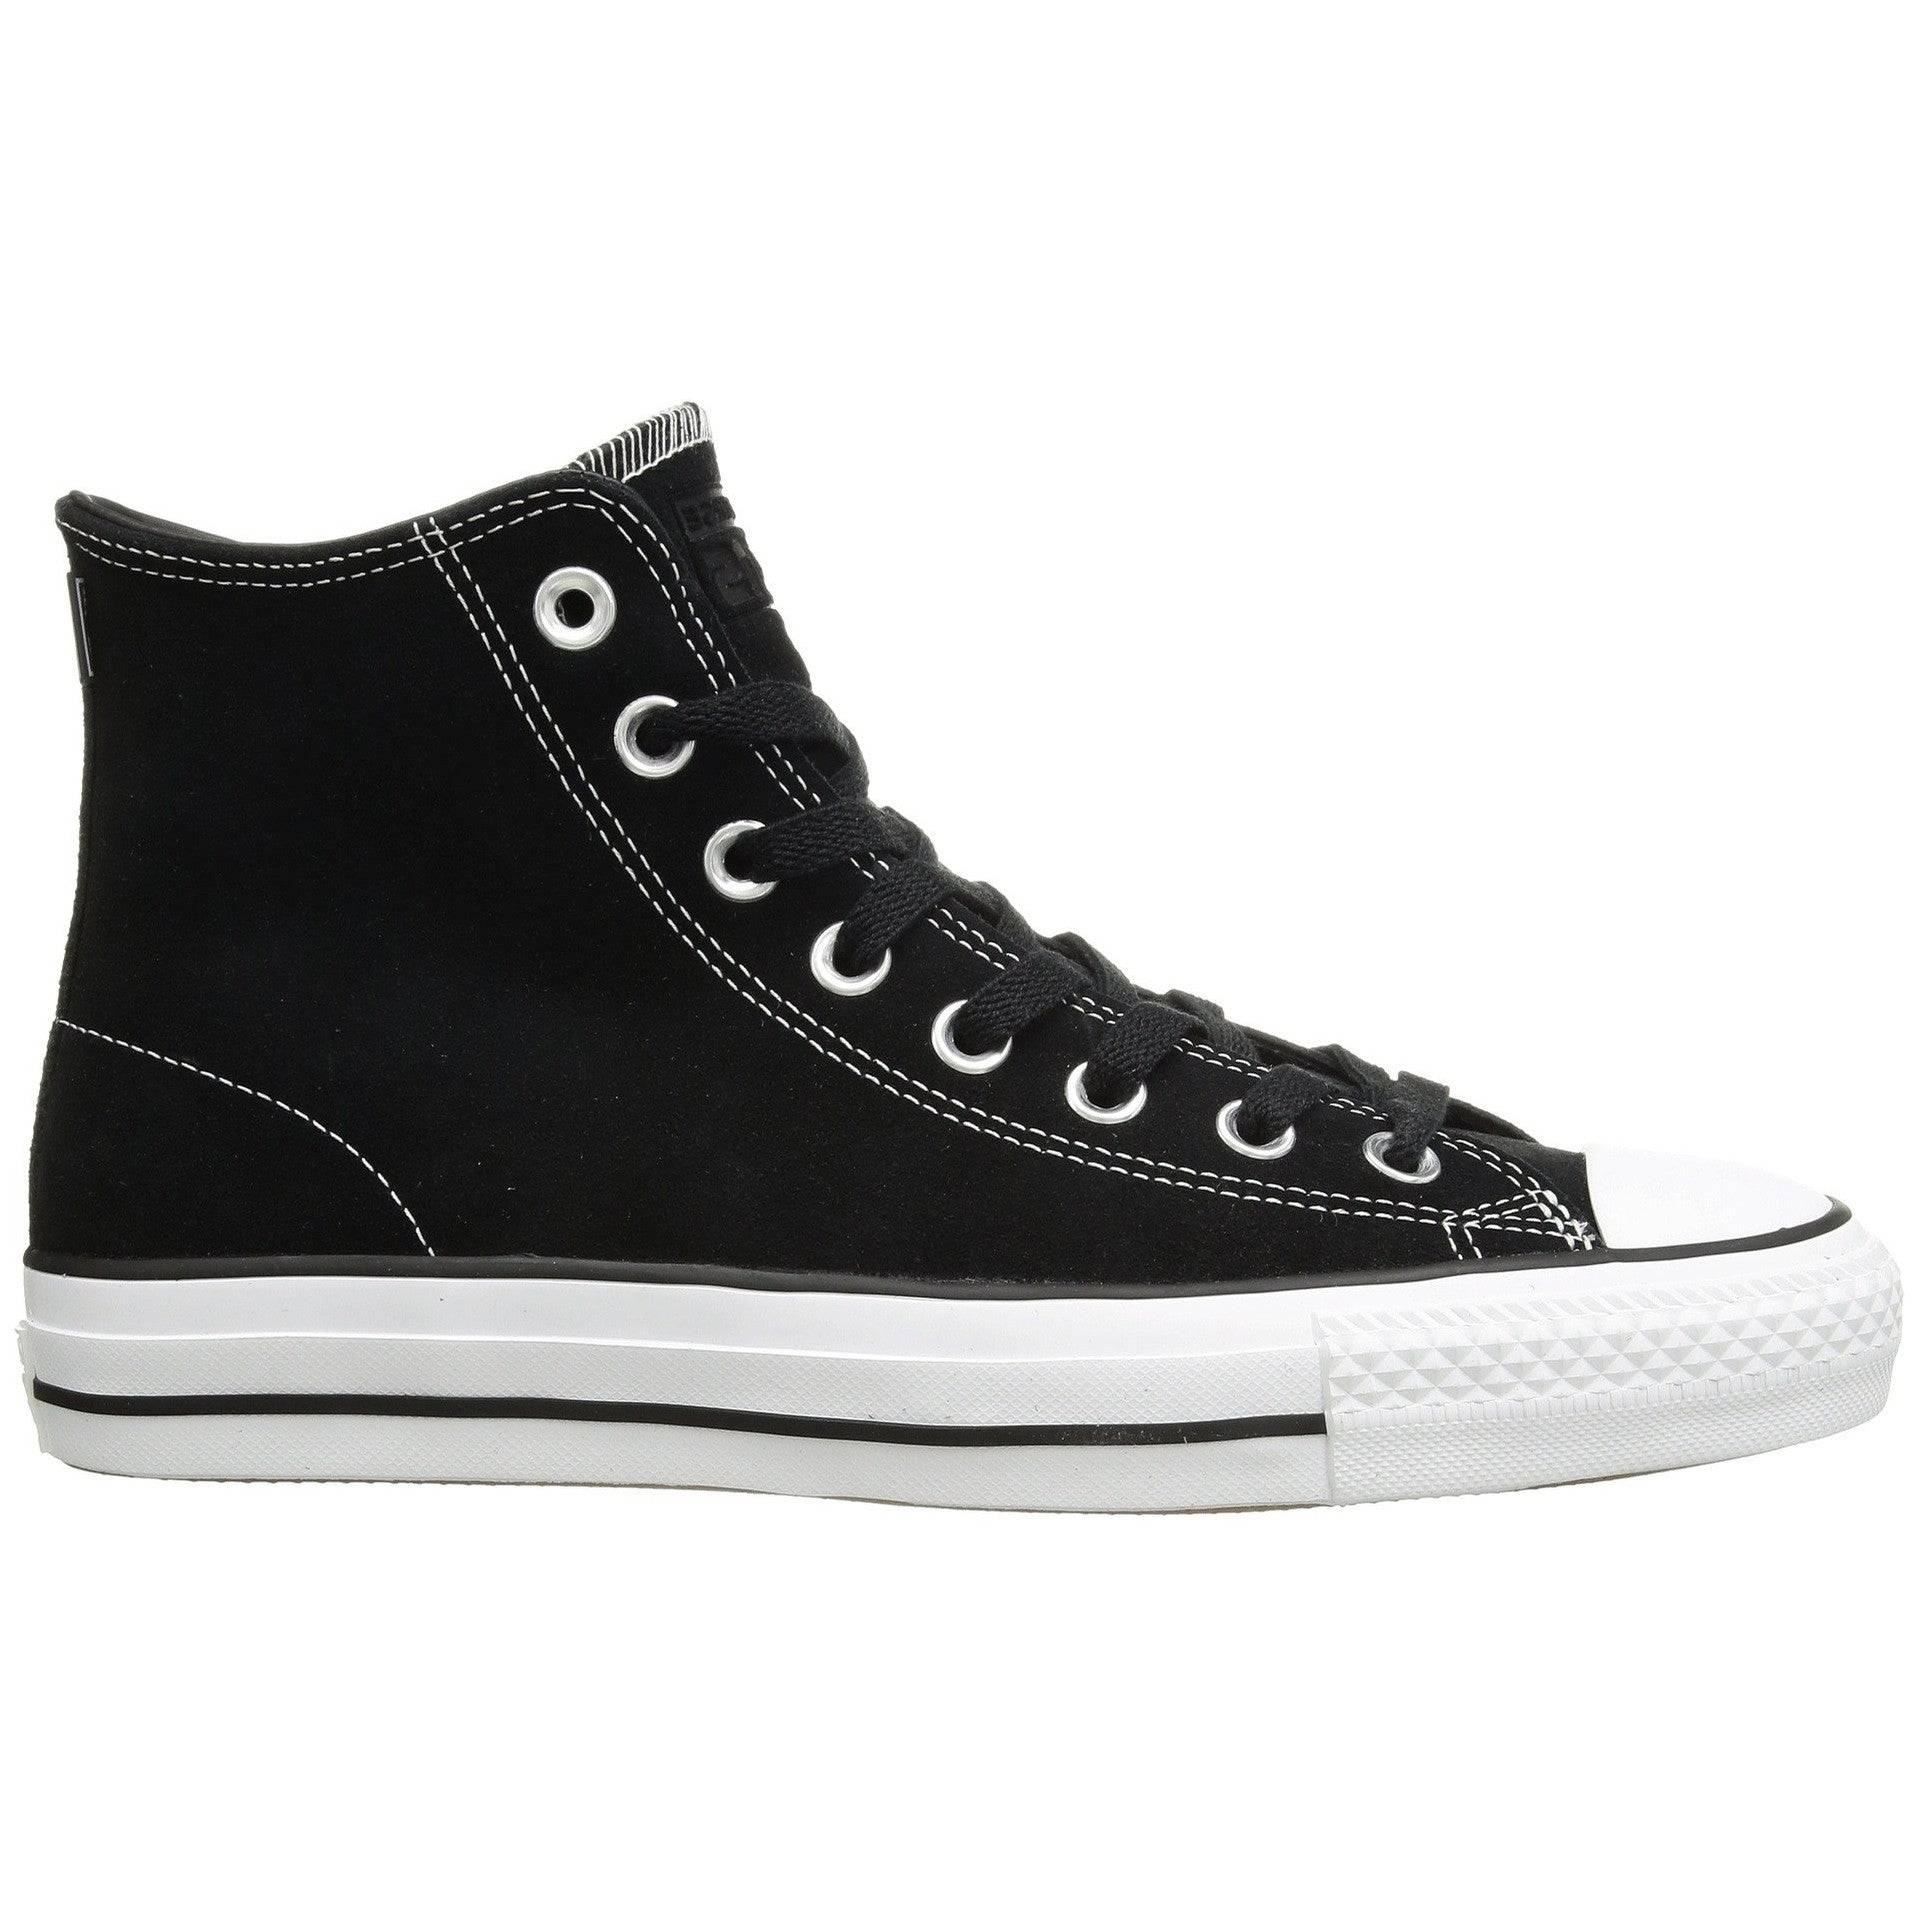 Converse CTAS Pro Hi Skate Shoe in Black Black White – M I L O S P O R T